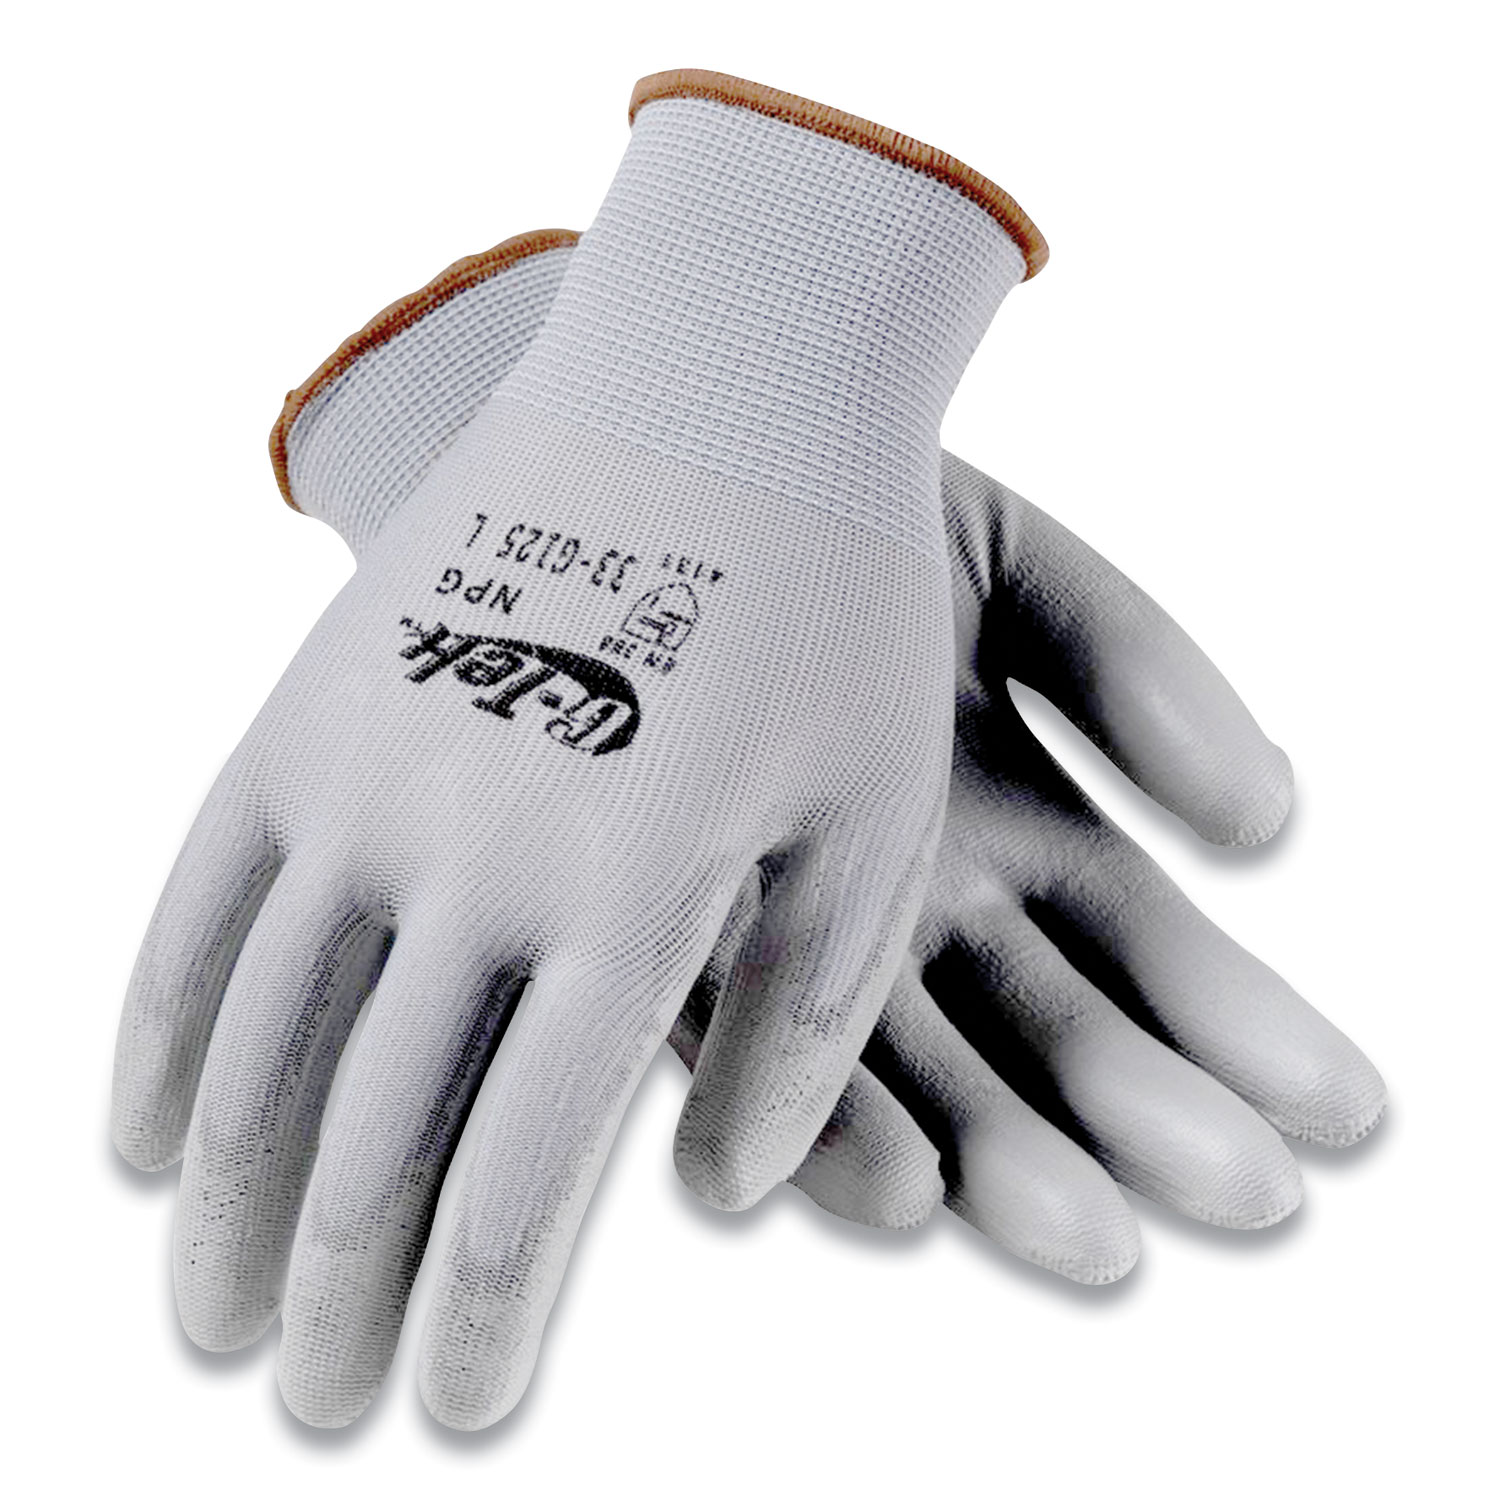  G-Tek 33-G125/L GP Polyurethane-Coated Nylon Gloves, Large, Gray, 12 Pairs (PID179921) 